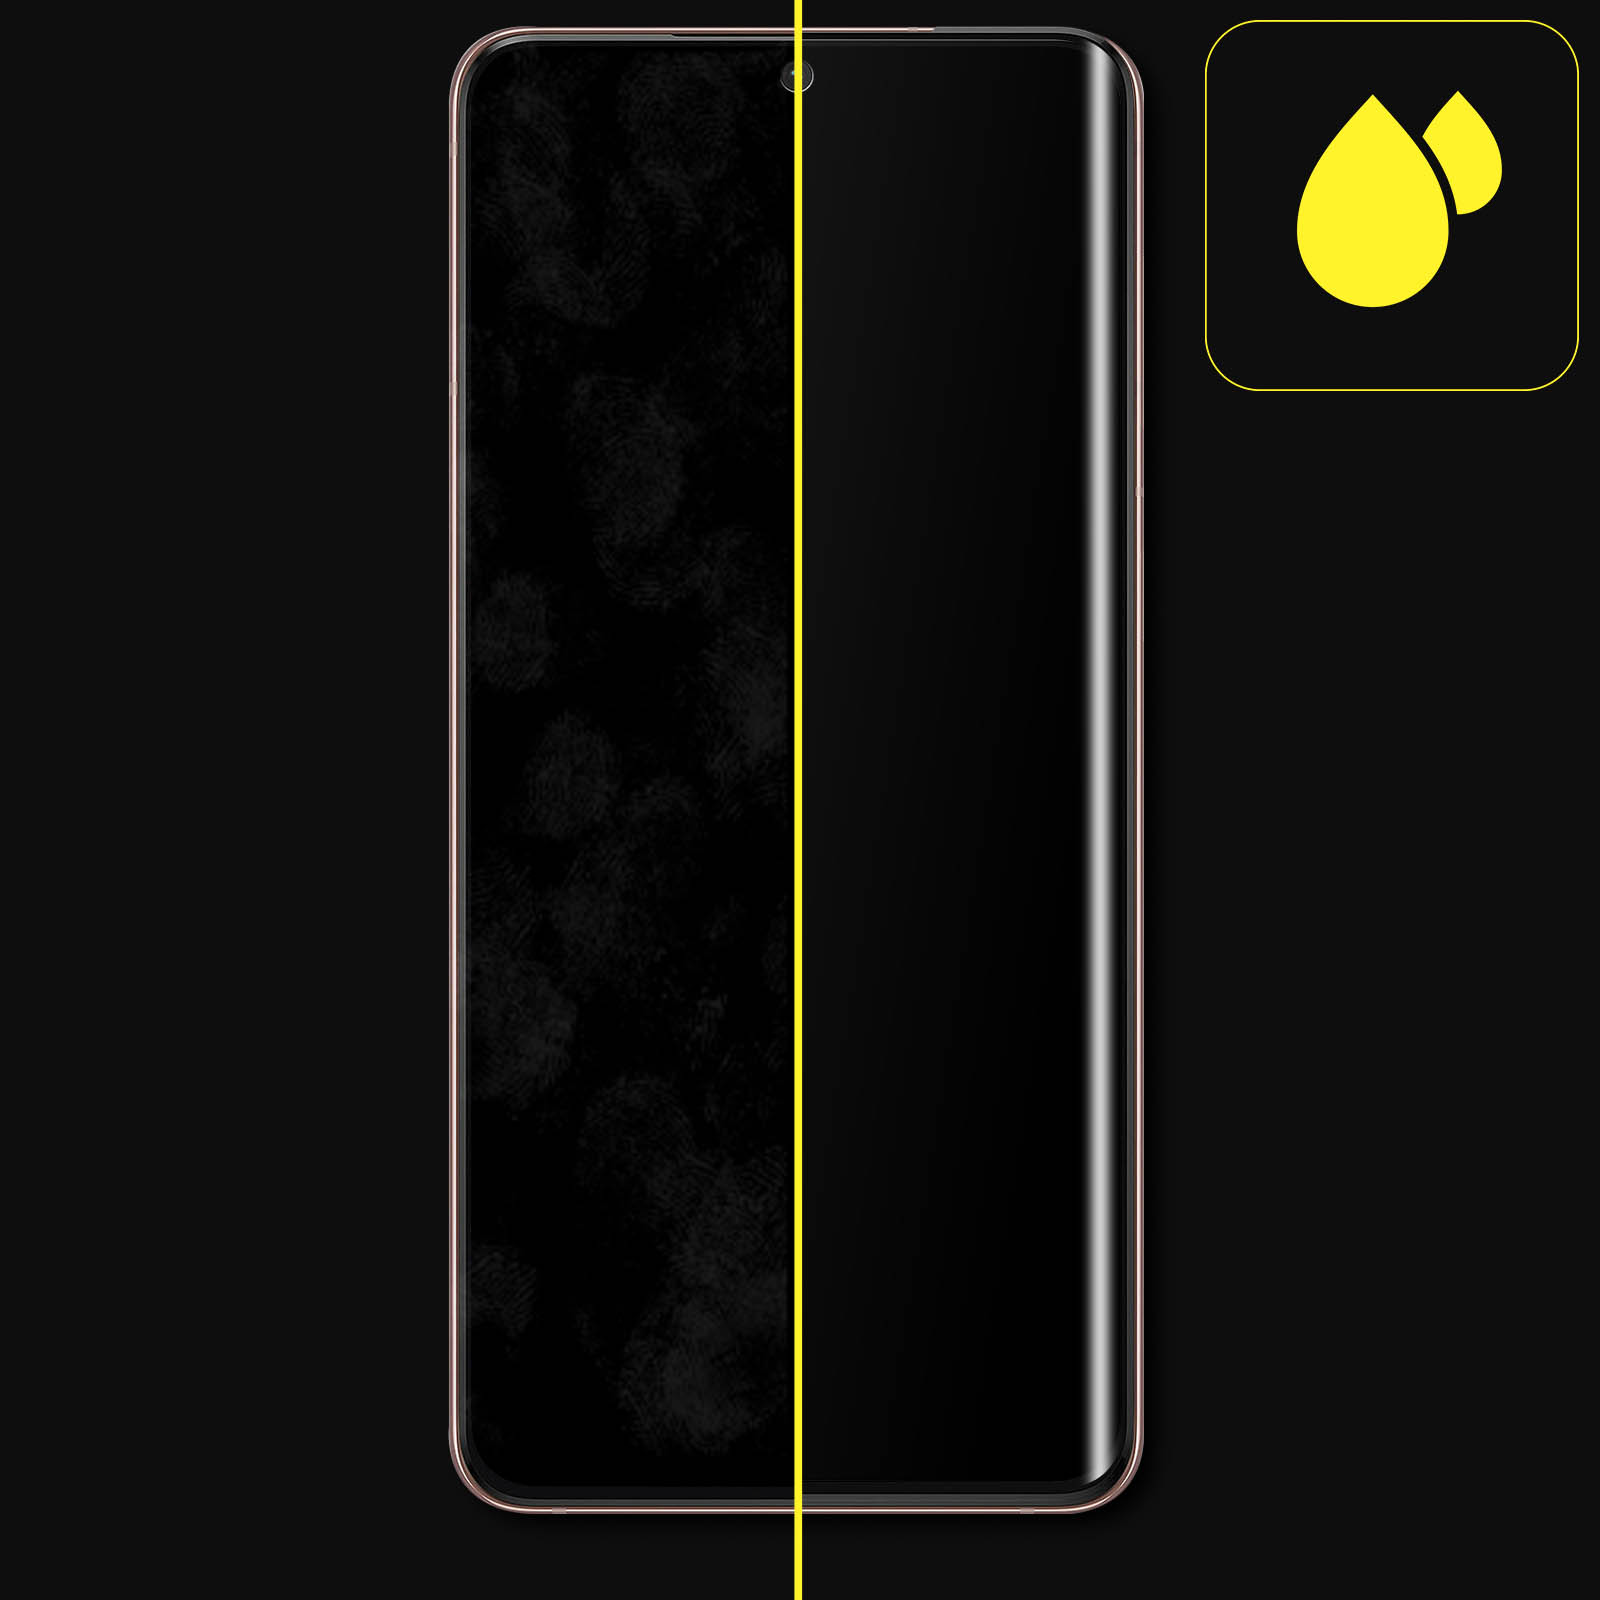 Film verre trempé 4D Noir compatible Samsung Galaxy S21 Ultra